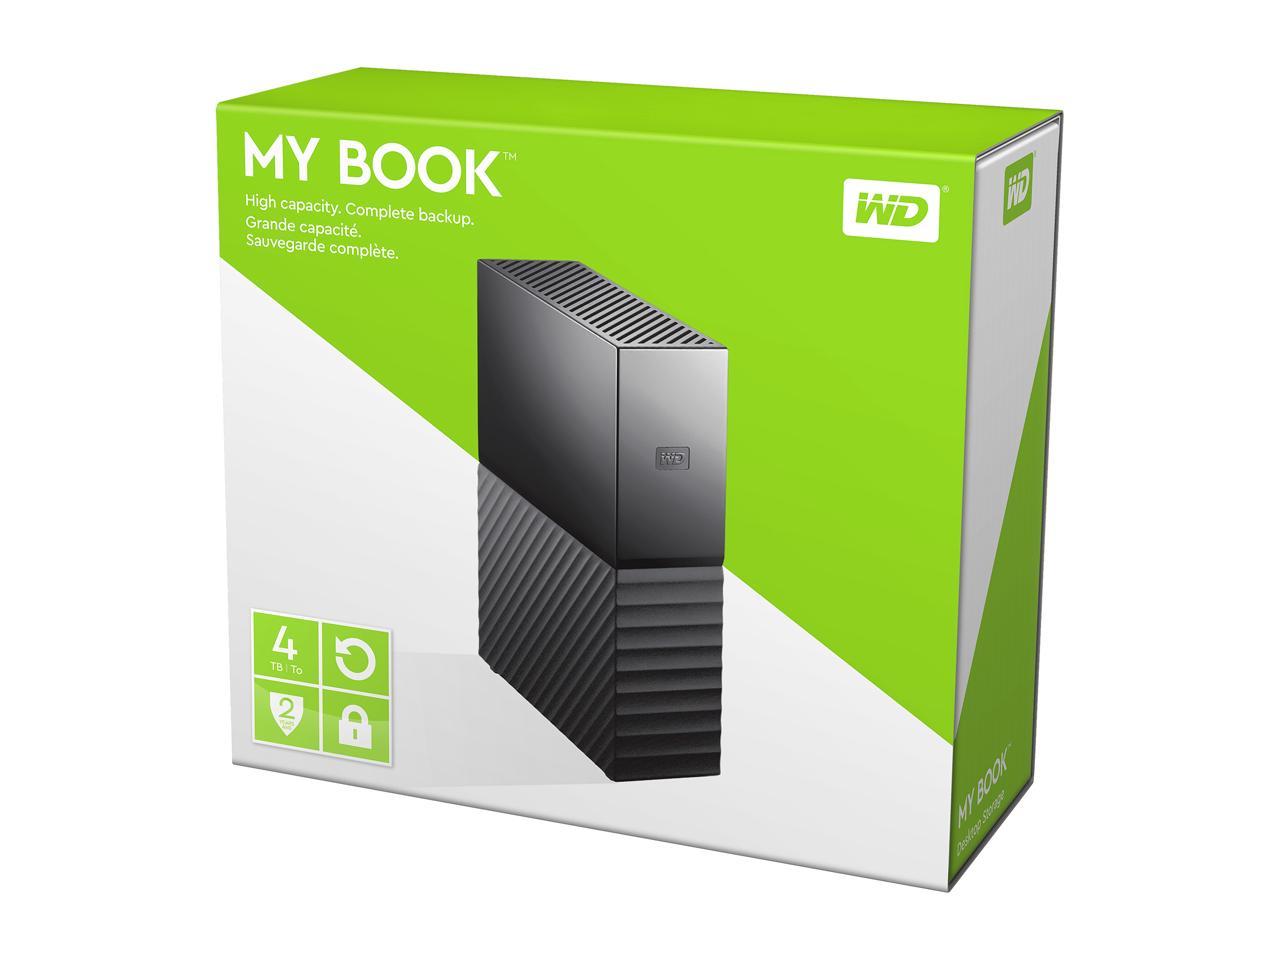 Wd My Book 4Tb Desktop External Hard Drive For Windows/Mac/Laptop, Usb 3.0 Black (Wdbbgb0040Hbk-Nesn)